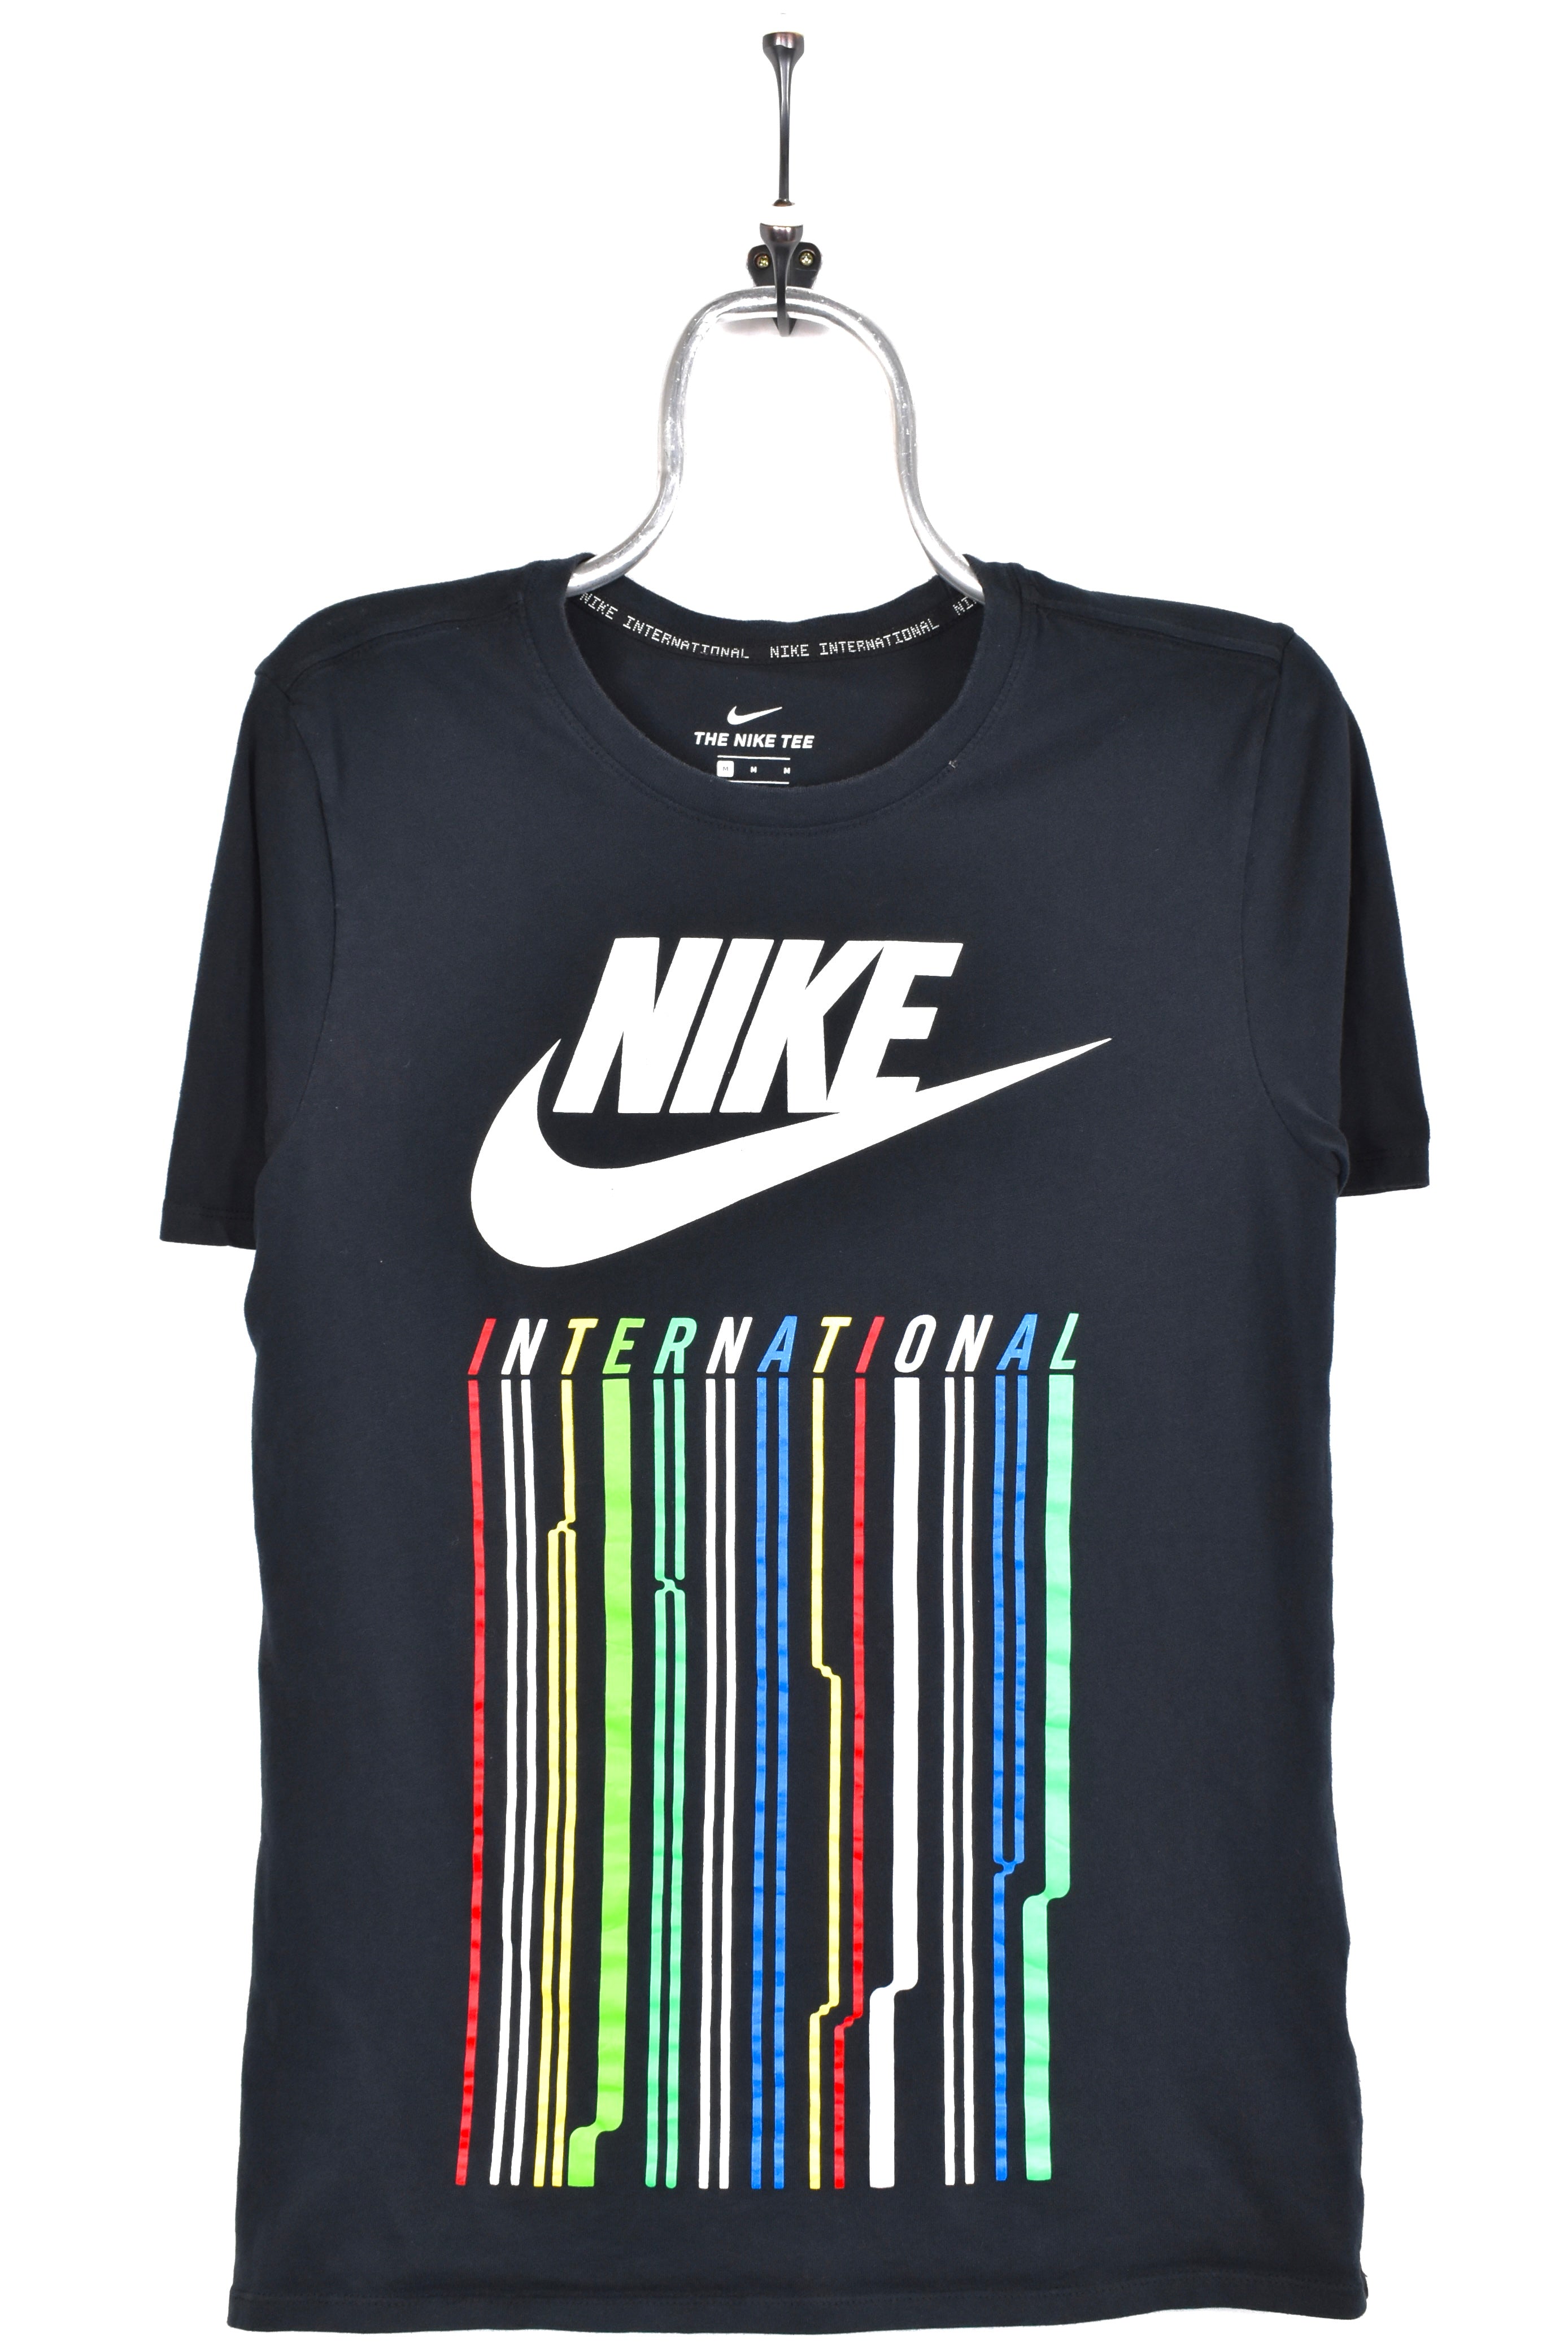 Women's modern Nike shirt, black graphic tee - AU S NIKE